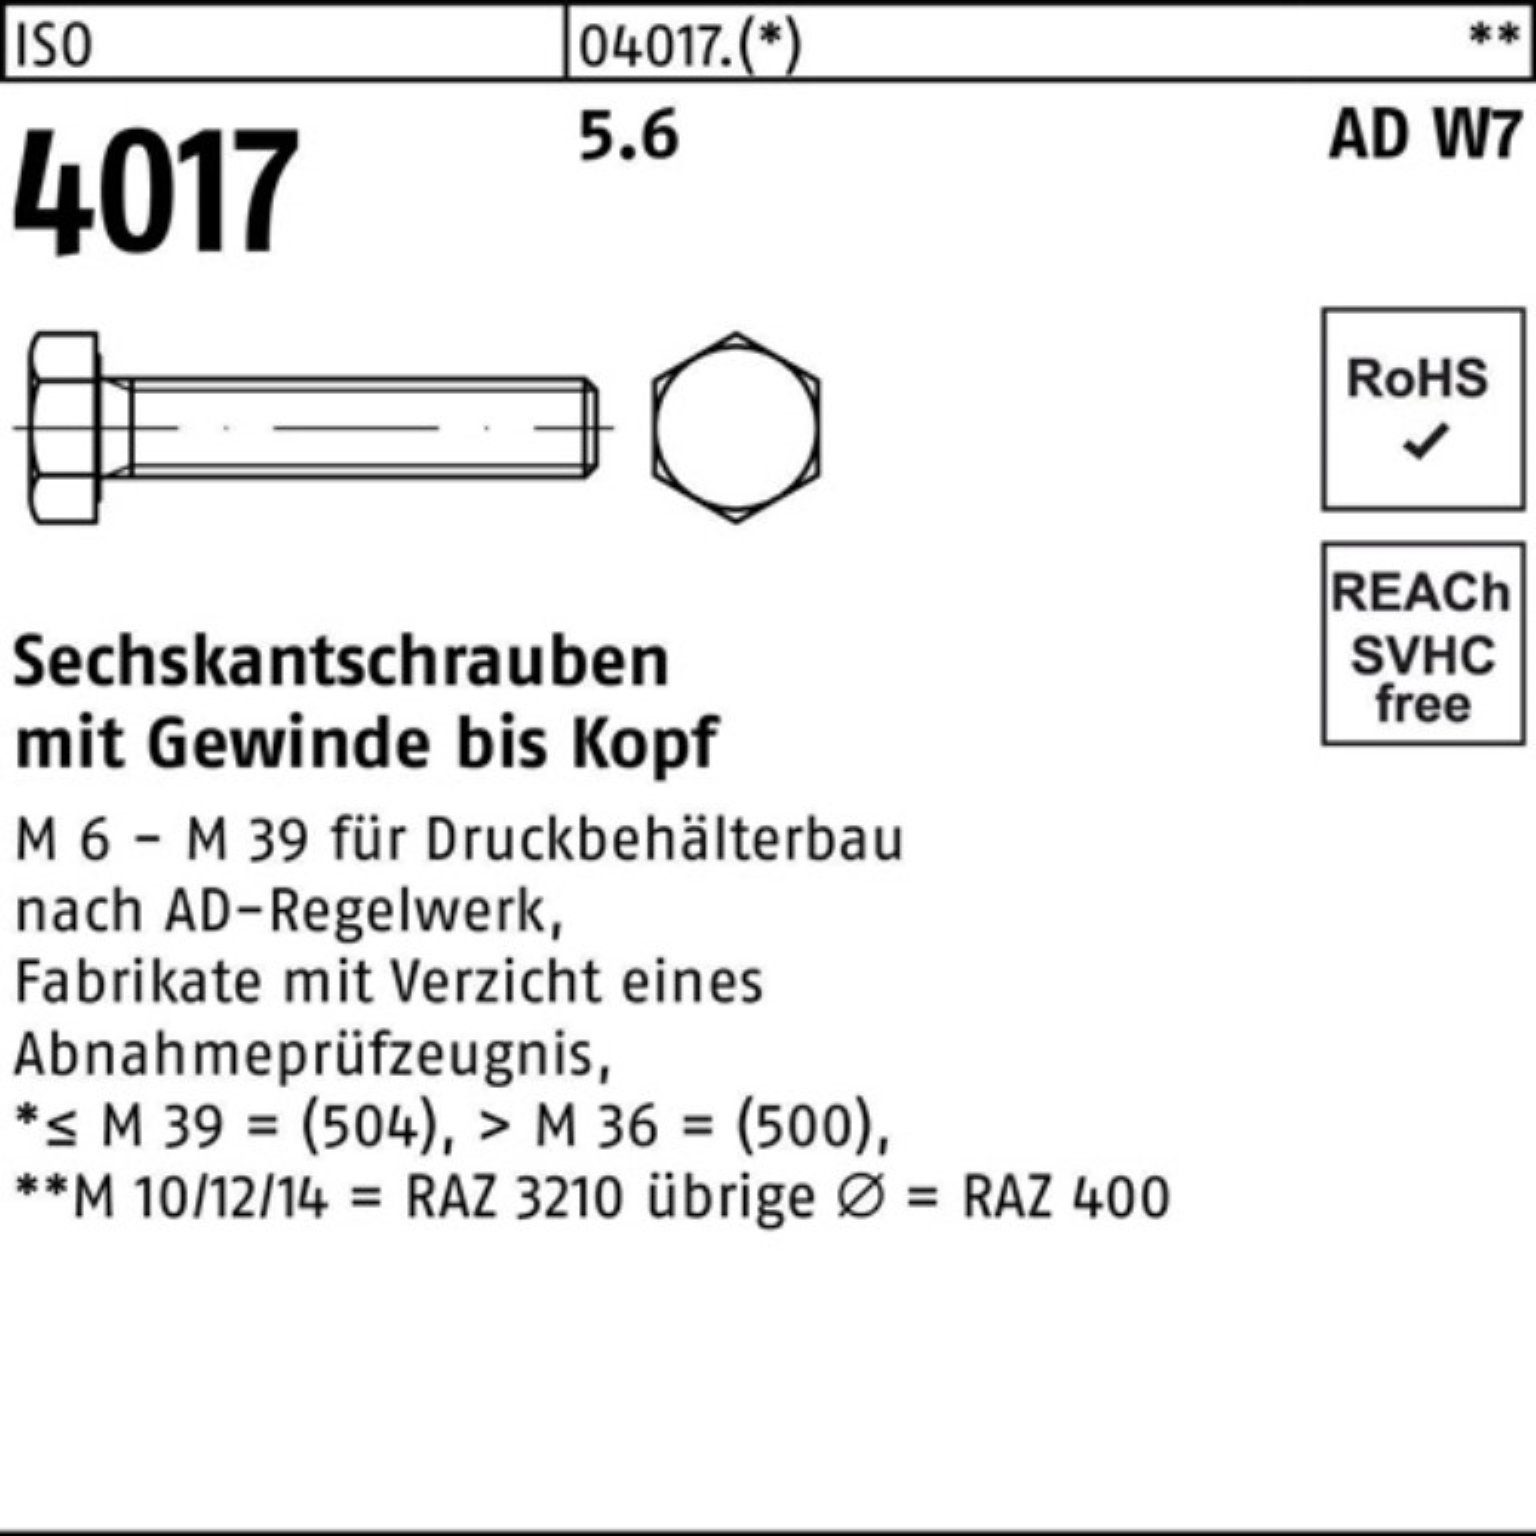 Bufab Sechskantschraube 100er Pack Sechskantschraube ISO 4017 VG M20x 30 5.6 AD W7 25 Stück I